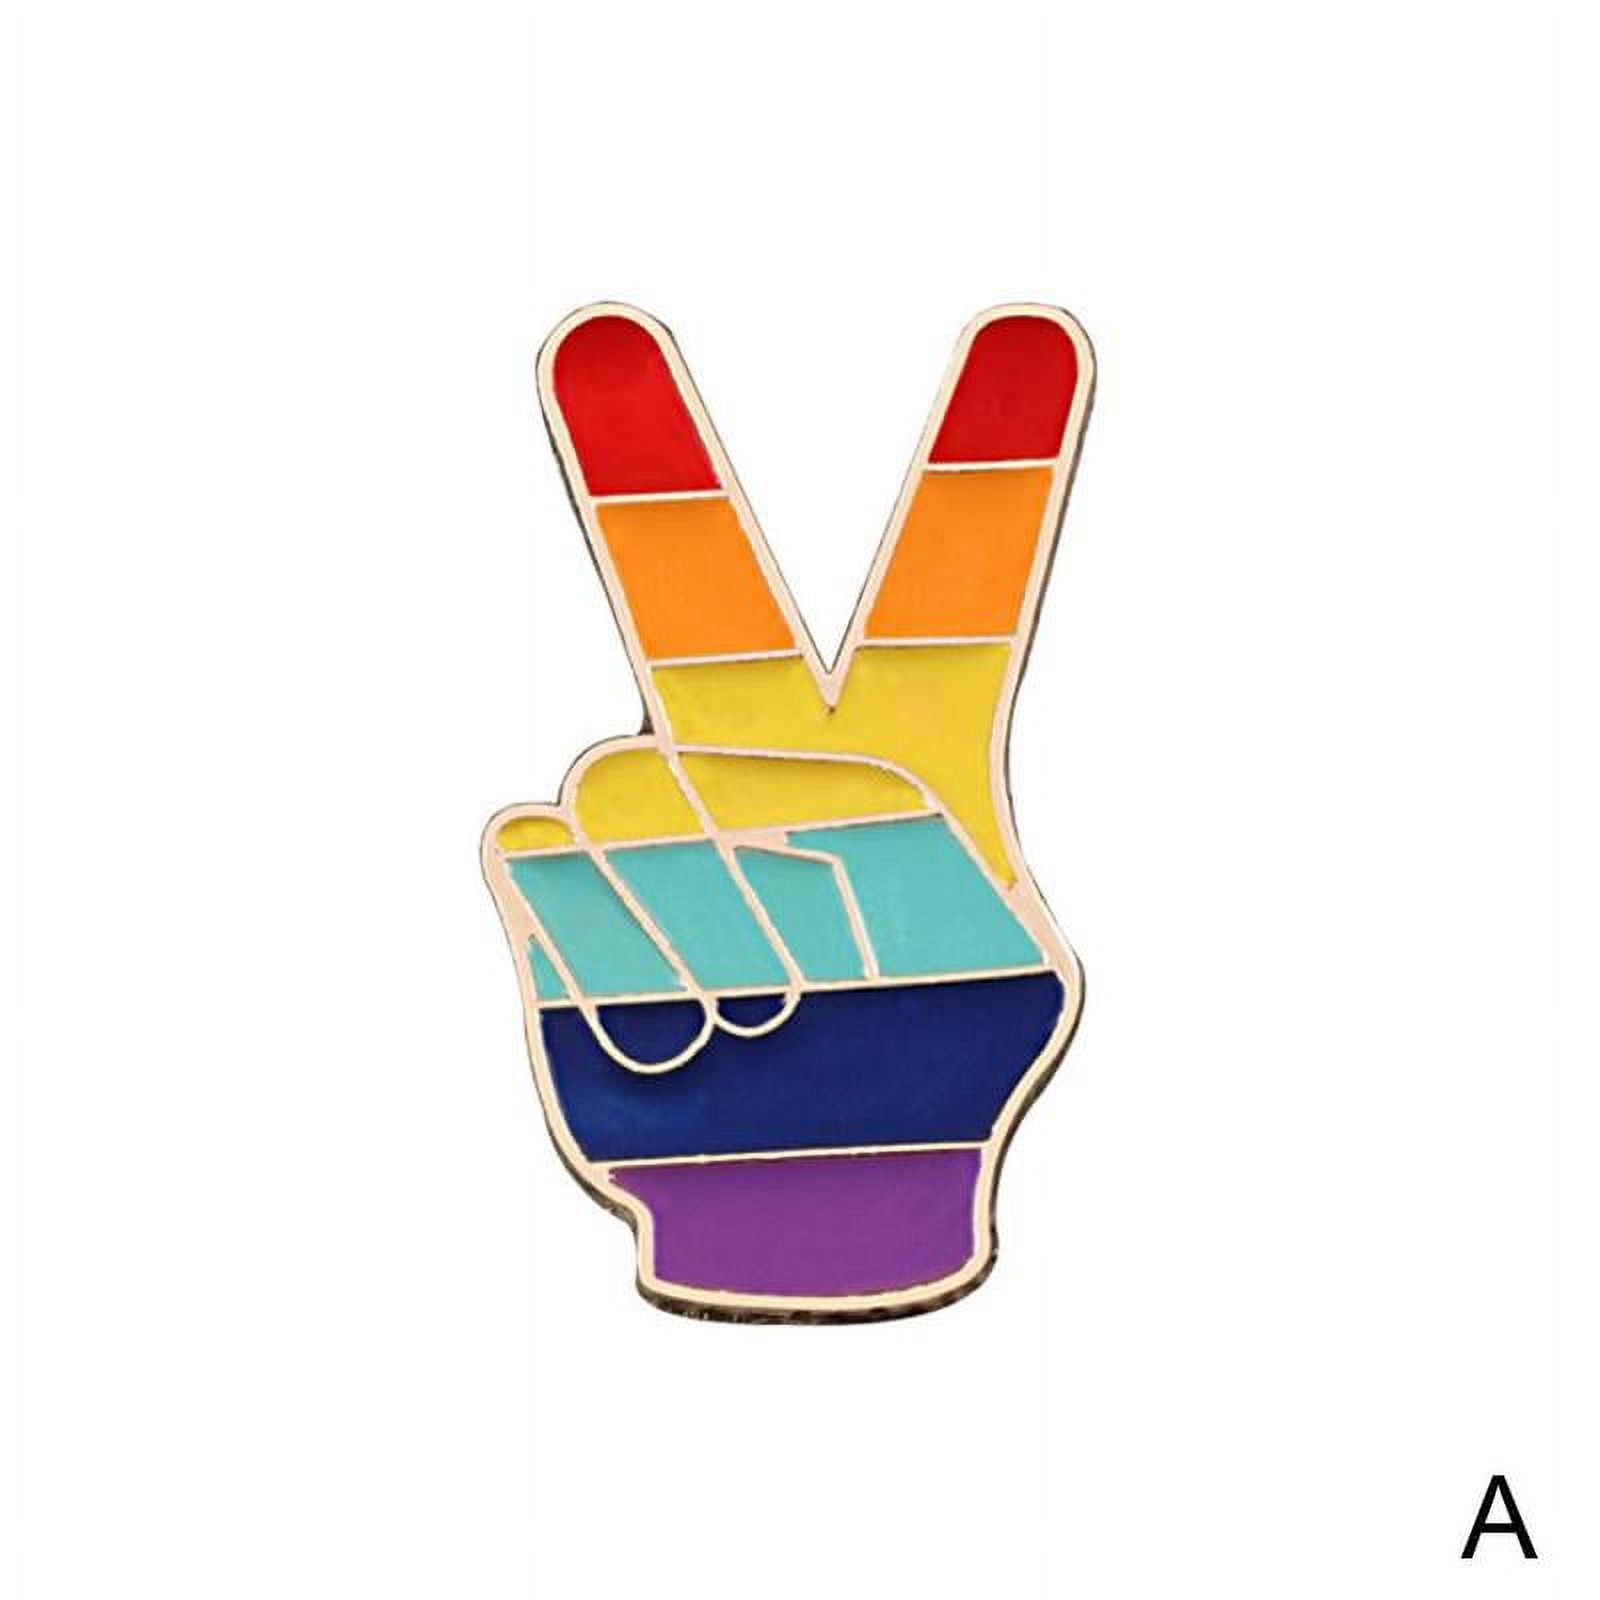 Rainbow Brooch Gay Pride Wavy Flag Heart Pin Metal Enamel Badge Lapel Pin Jewelry for Scarves, Headscarves, Dresses, Suits, Bags, Backpacks Y2H7 - image 1 of 9